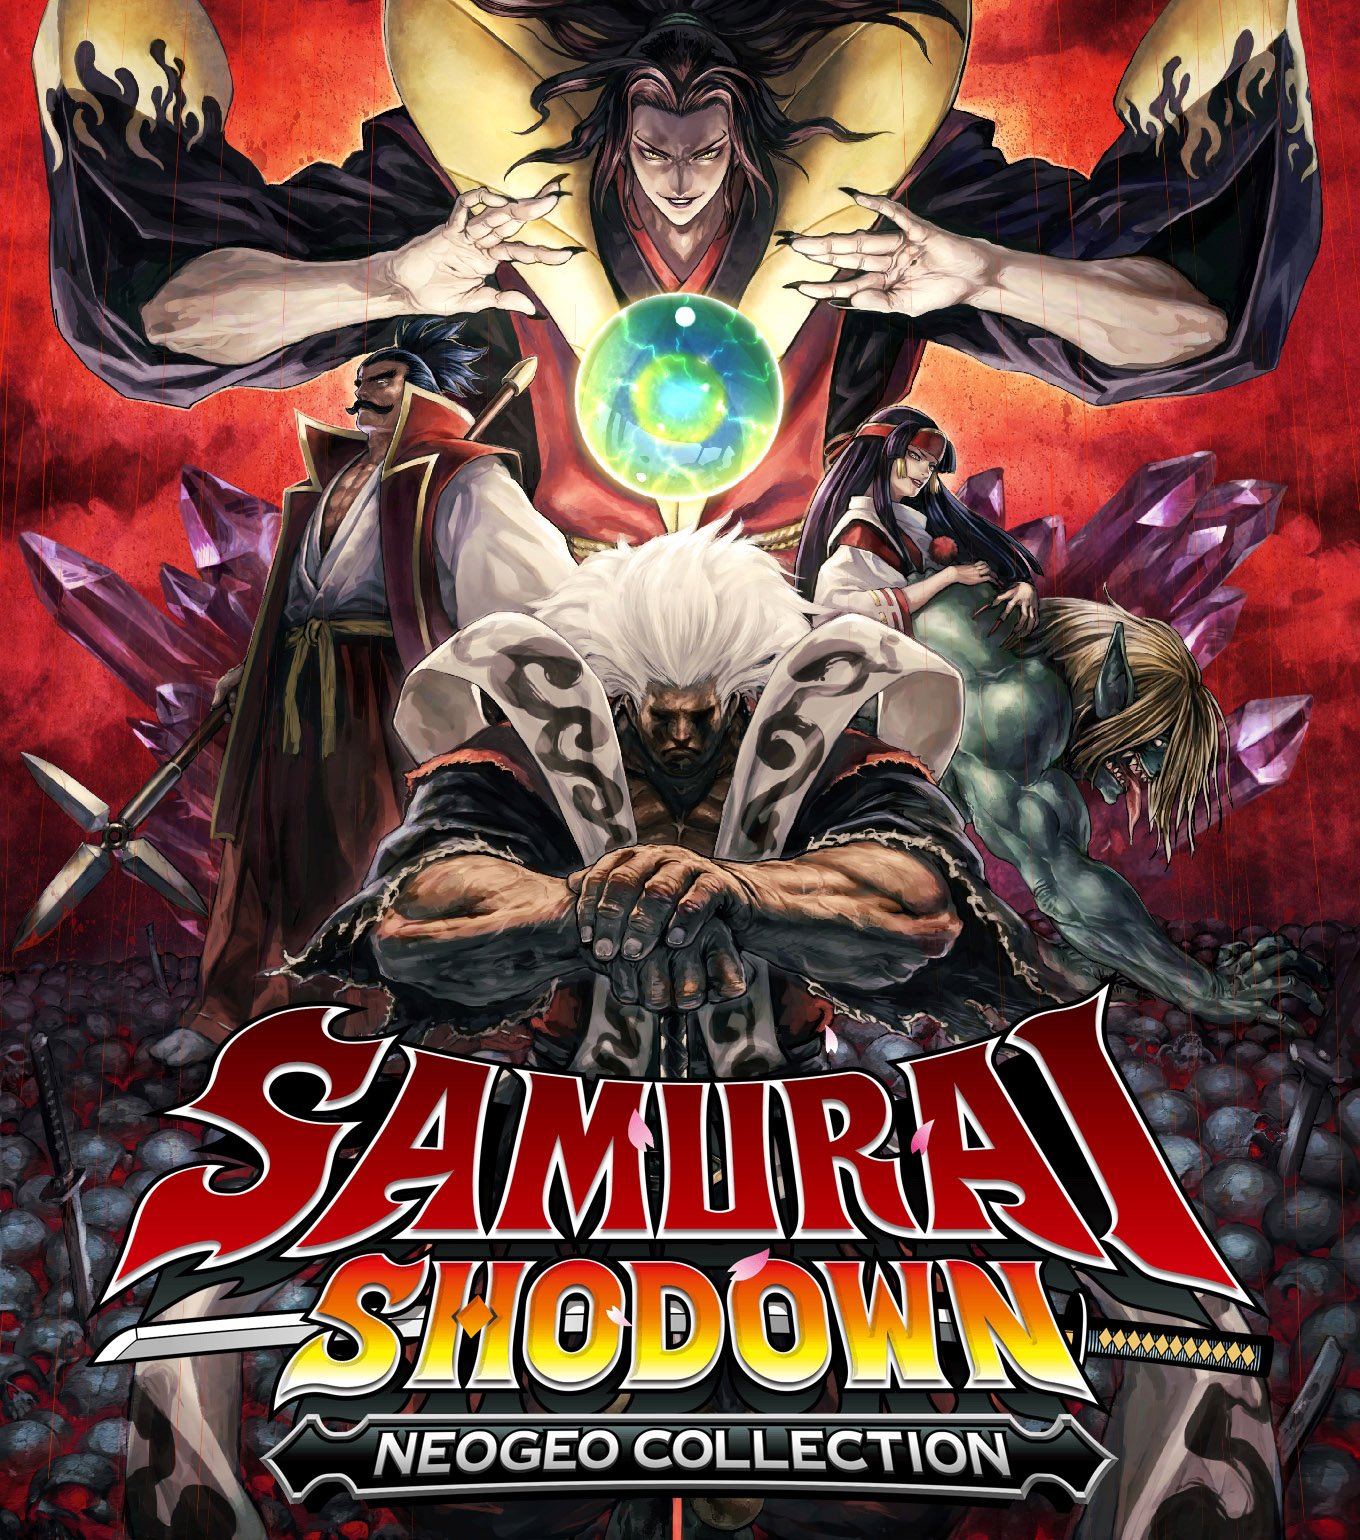 Samurai Shodown NeoGeo Collection gratis su Epic Games Store